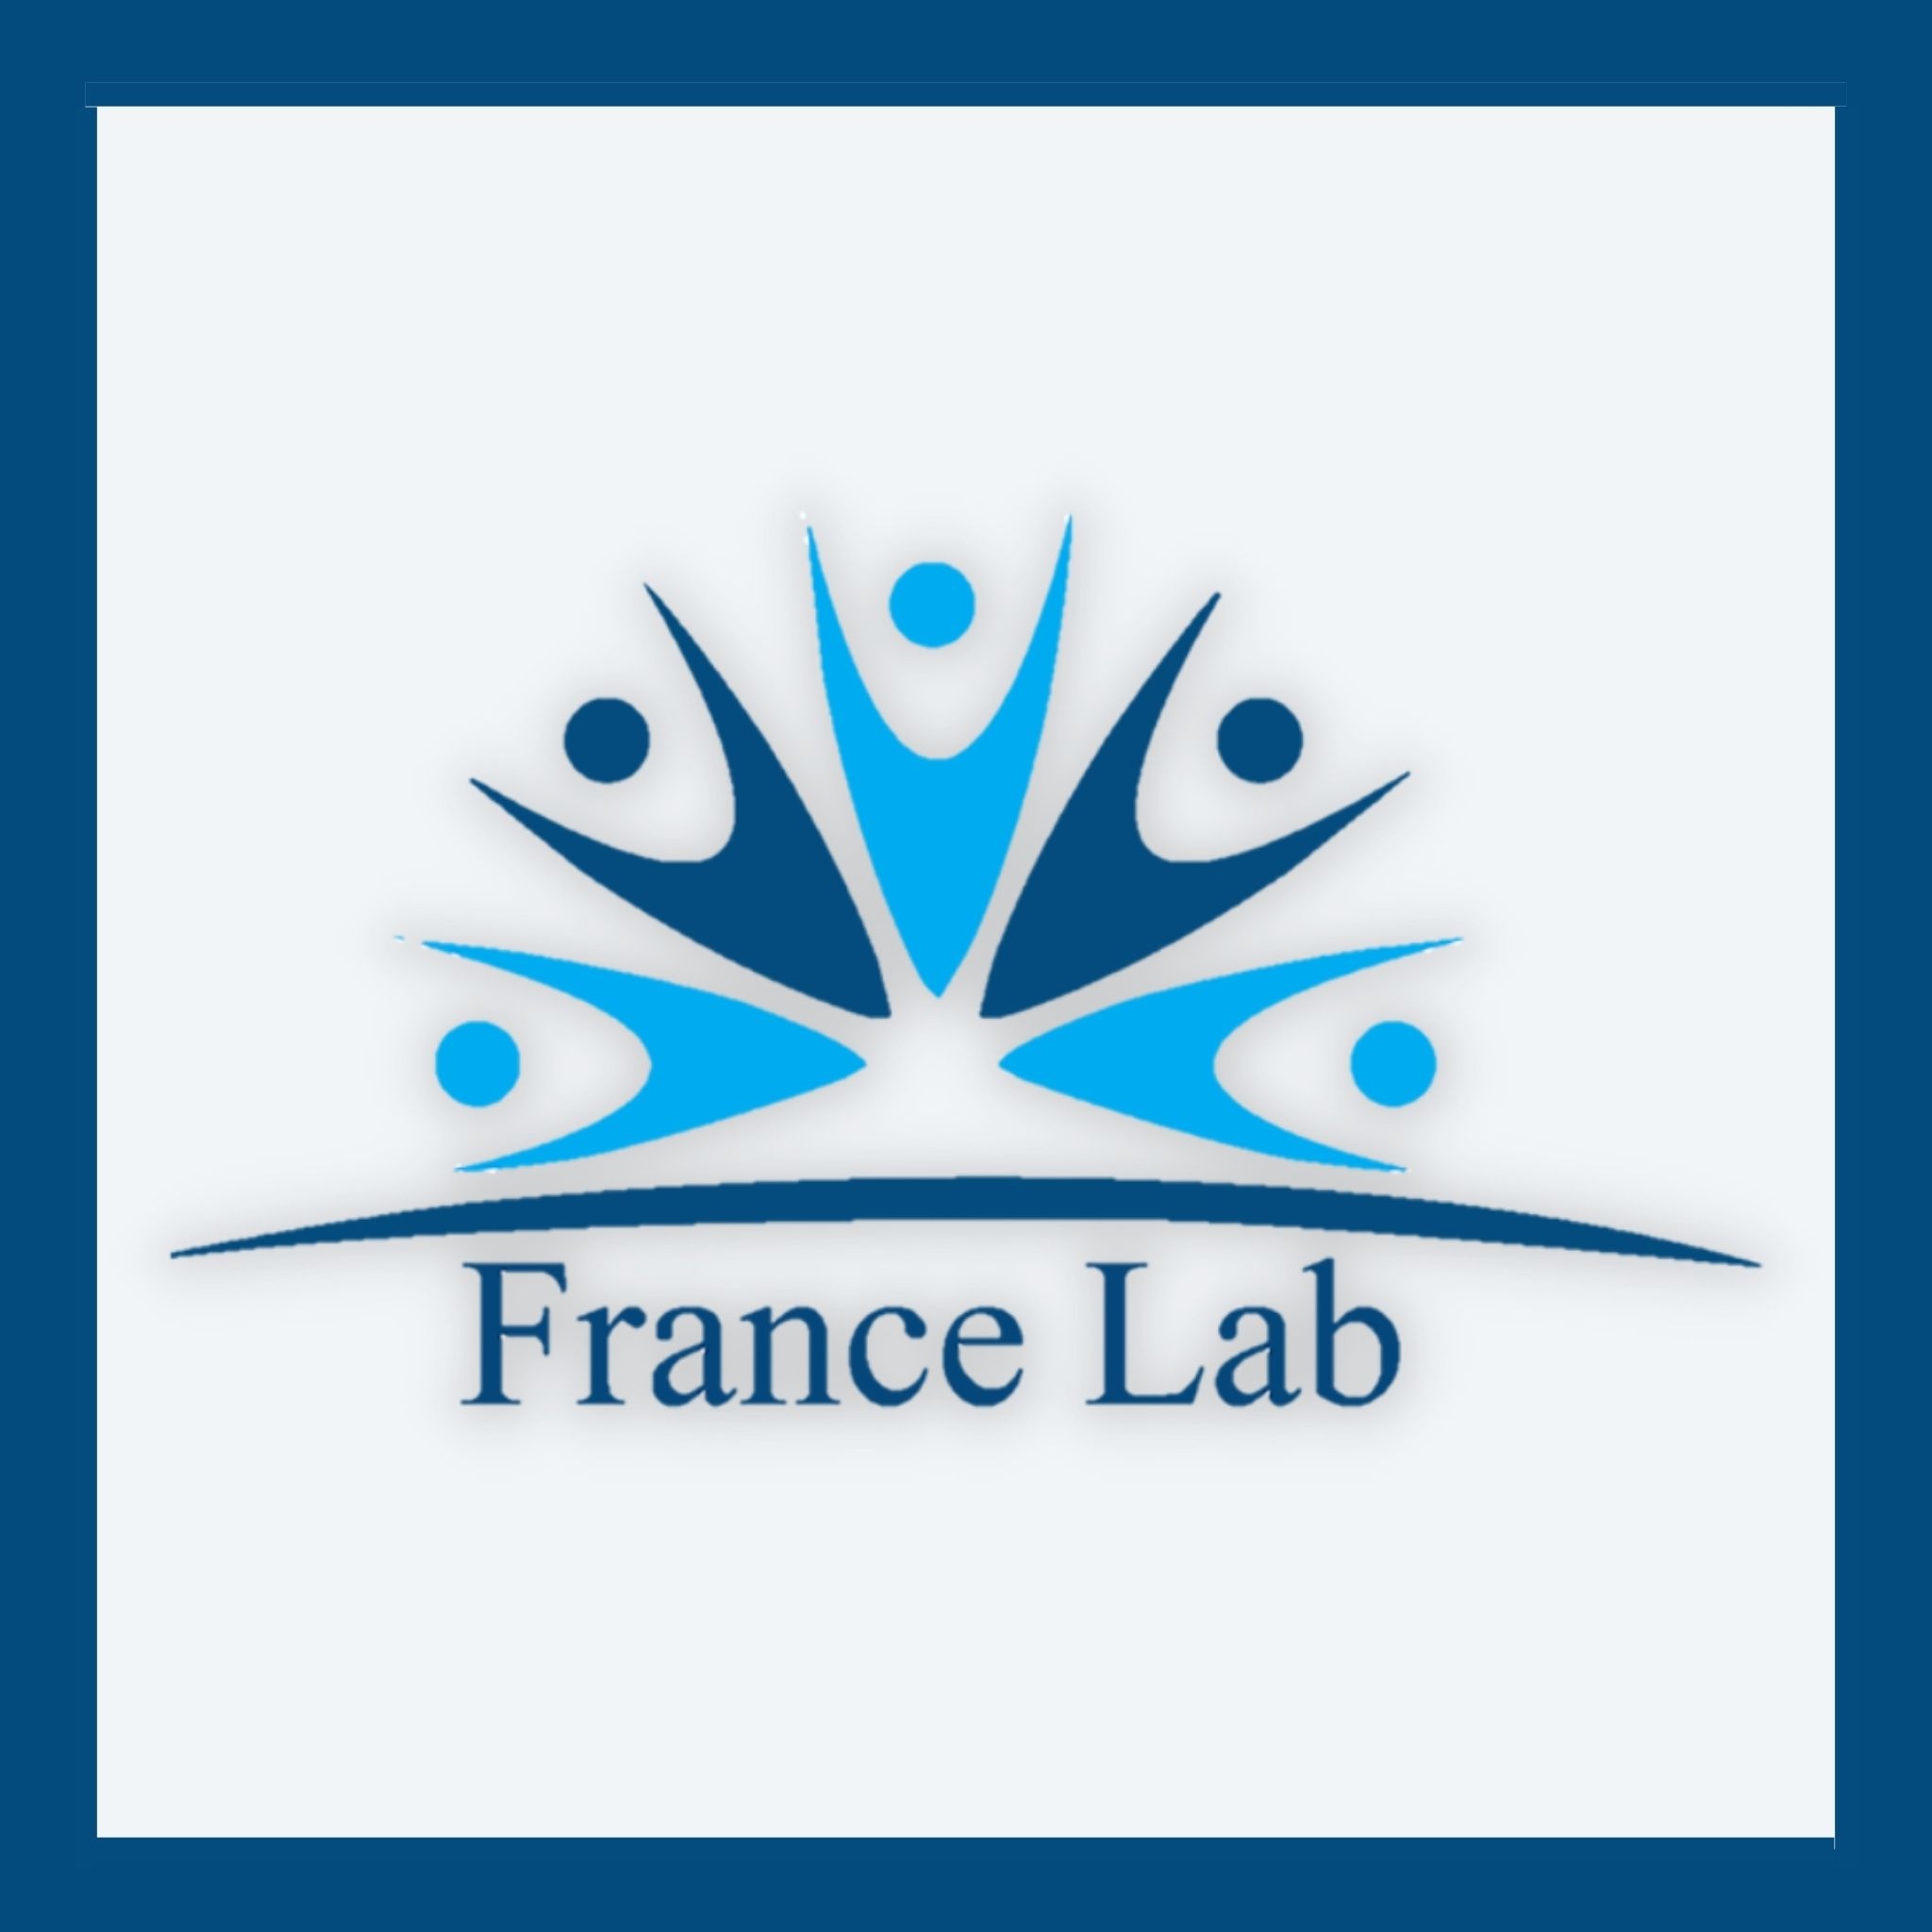 France Lab Company